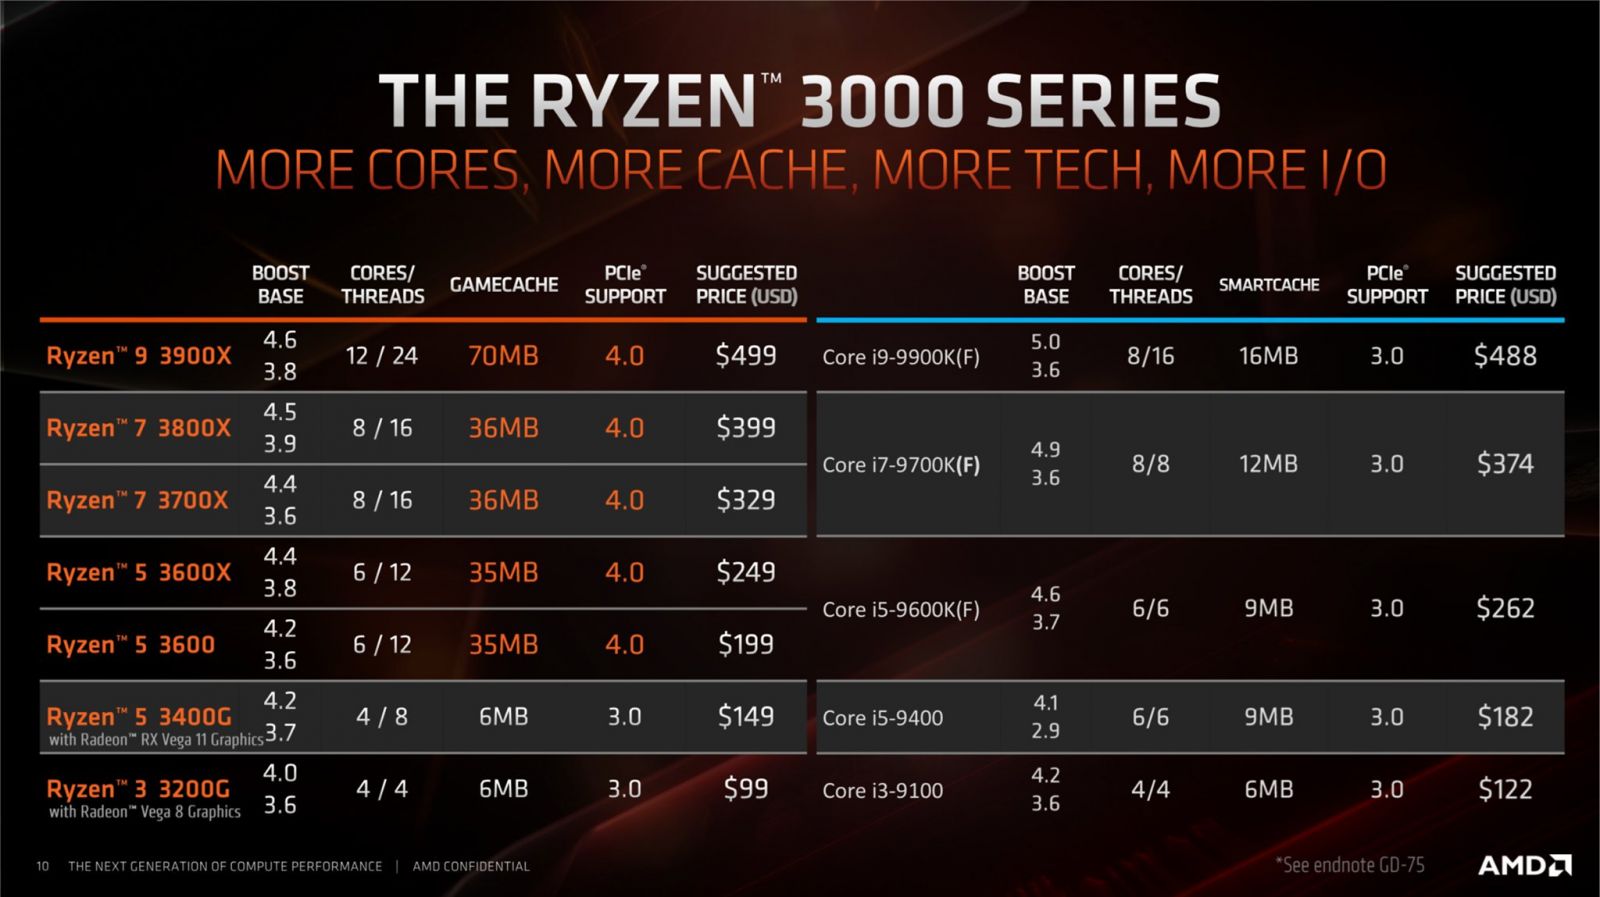 AMD-Ryzen-3200G-3400G-Specs-Pricing.jpg